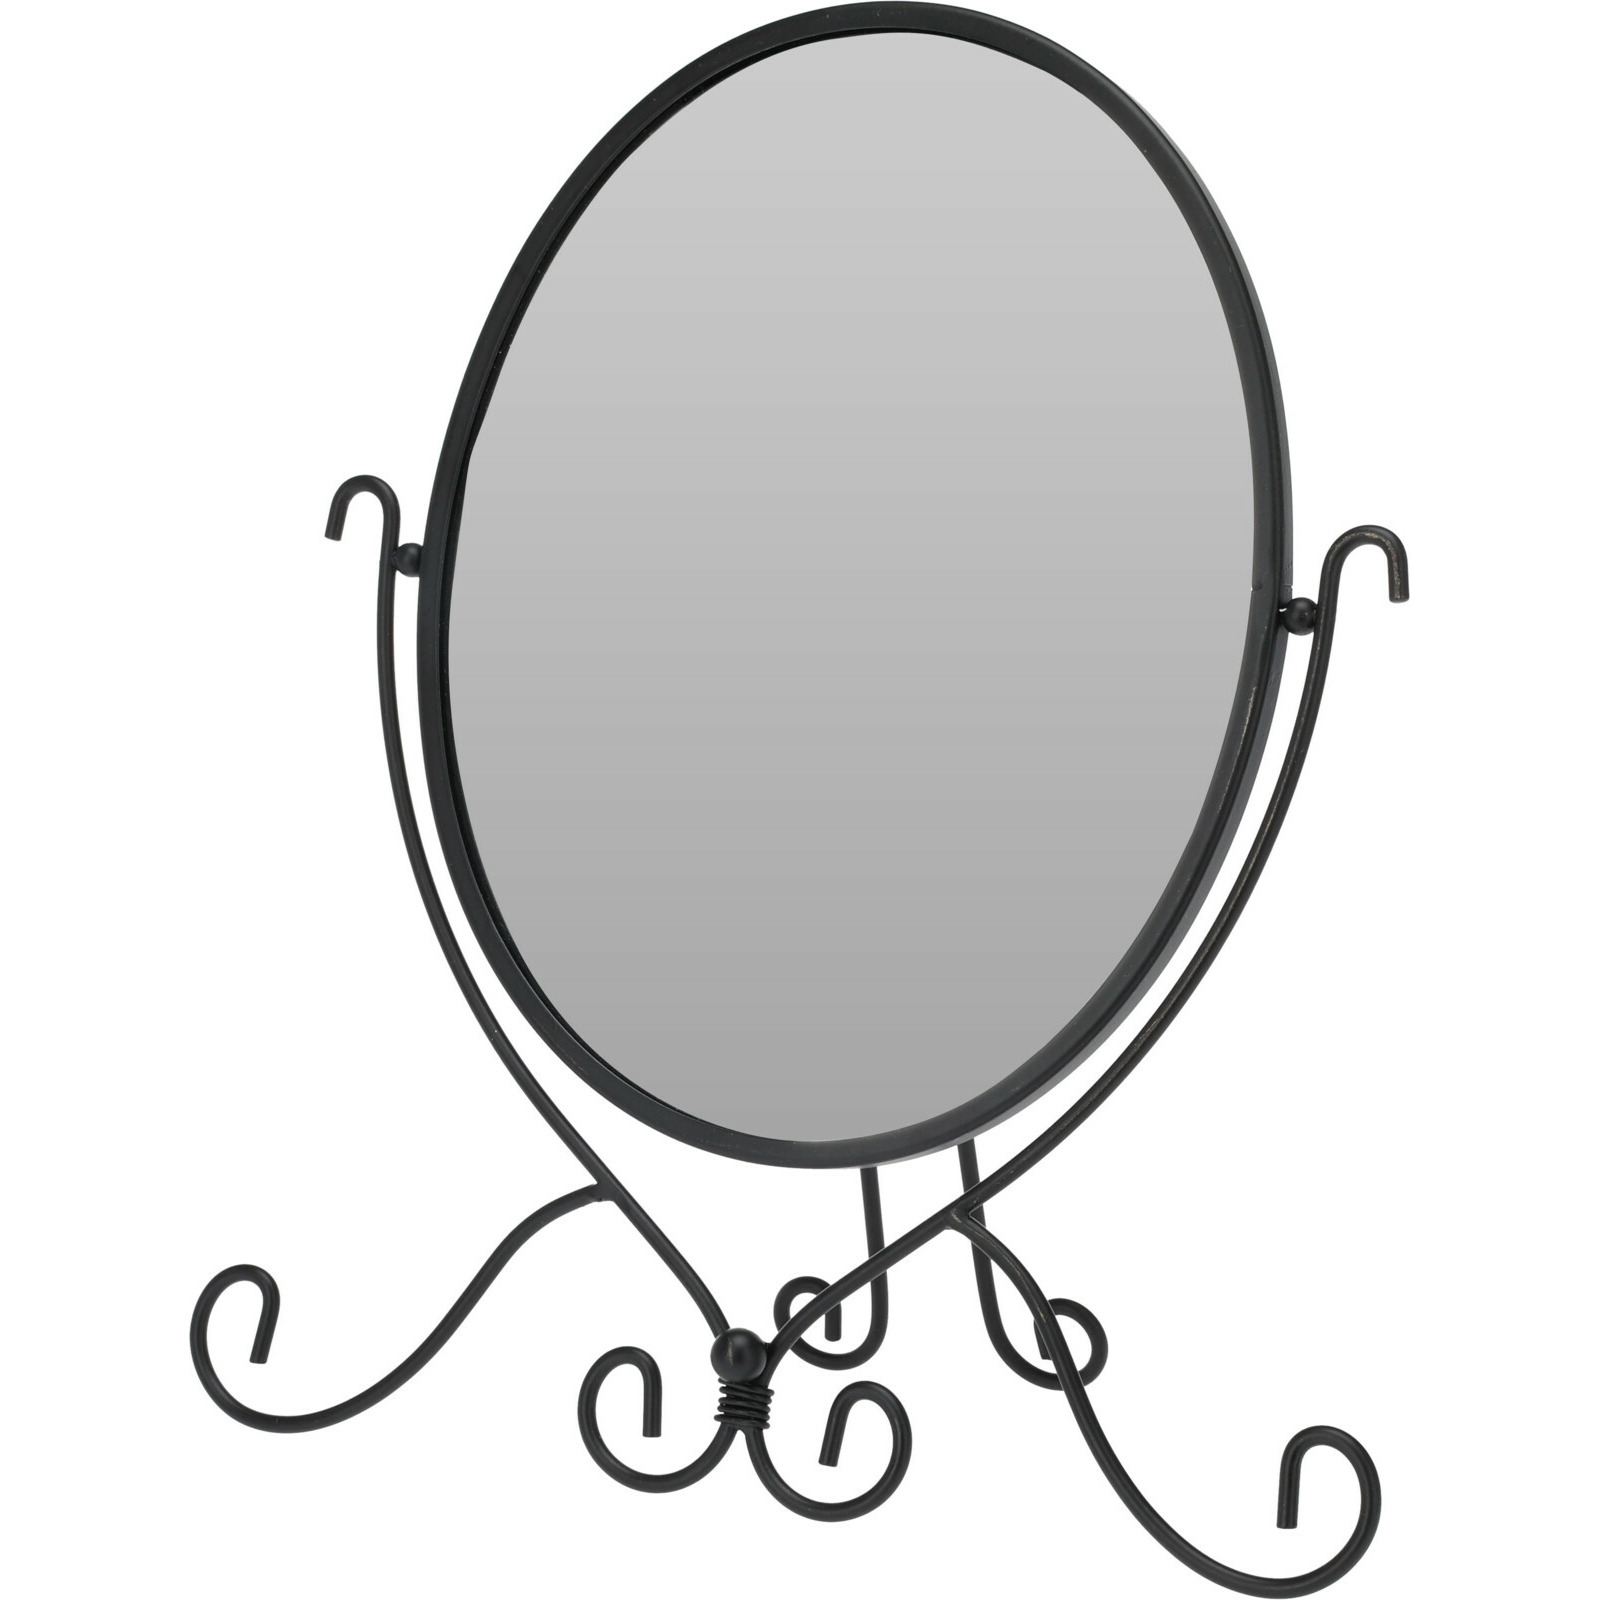 Make-up tafelmodel spiegel 28 x 32 cm zwarte rand Romantic sierlijk model